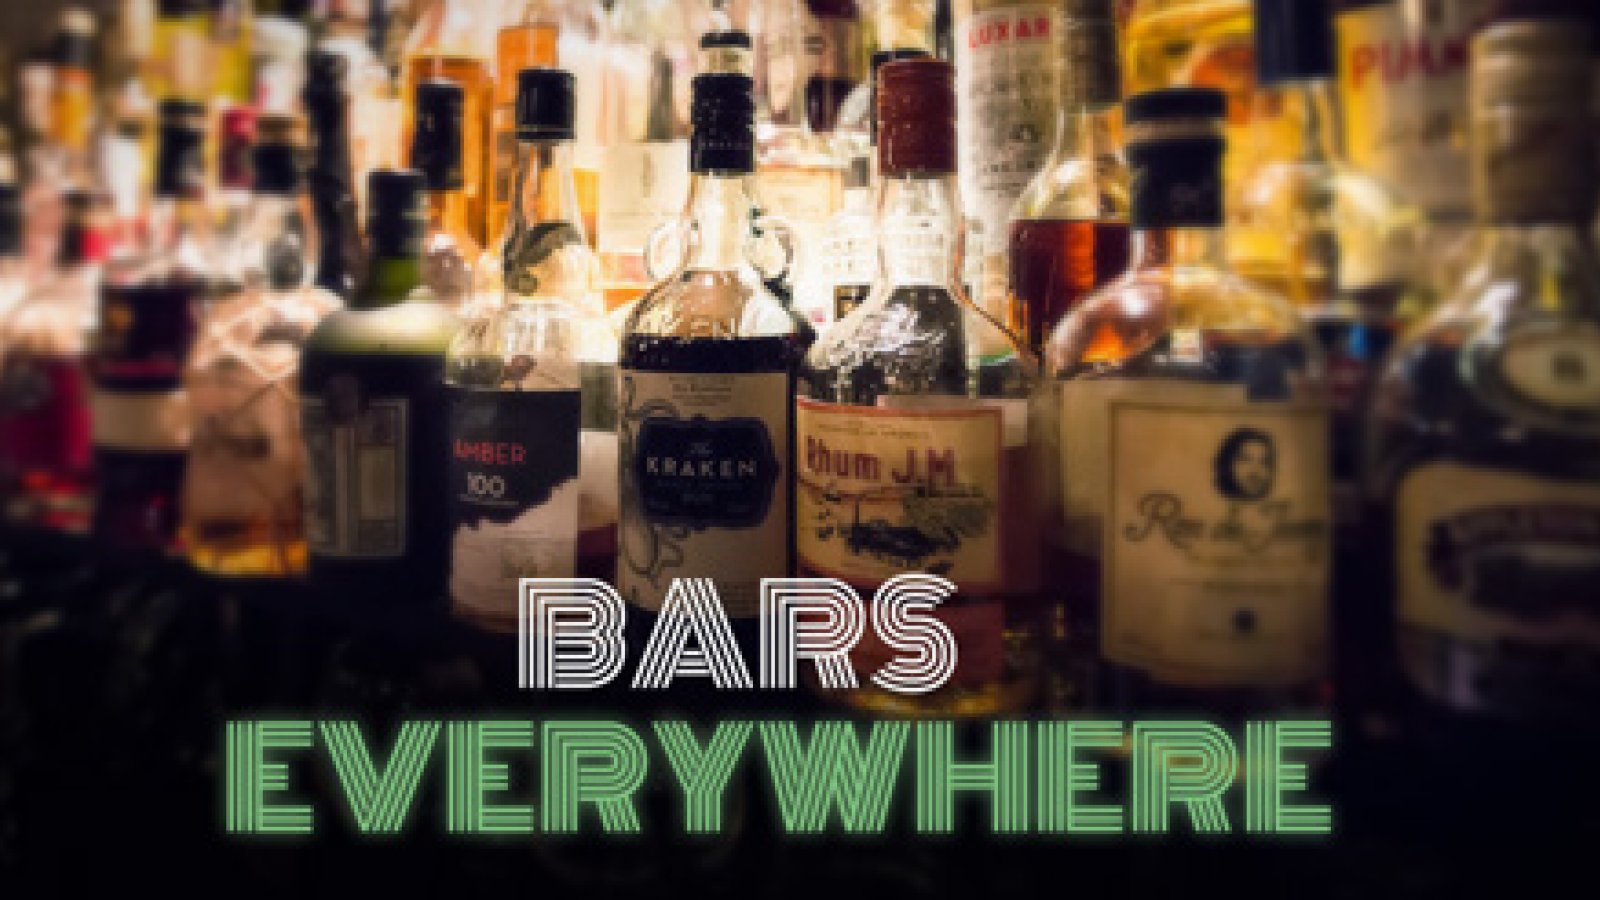 Bars everywhere